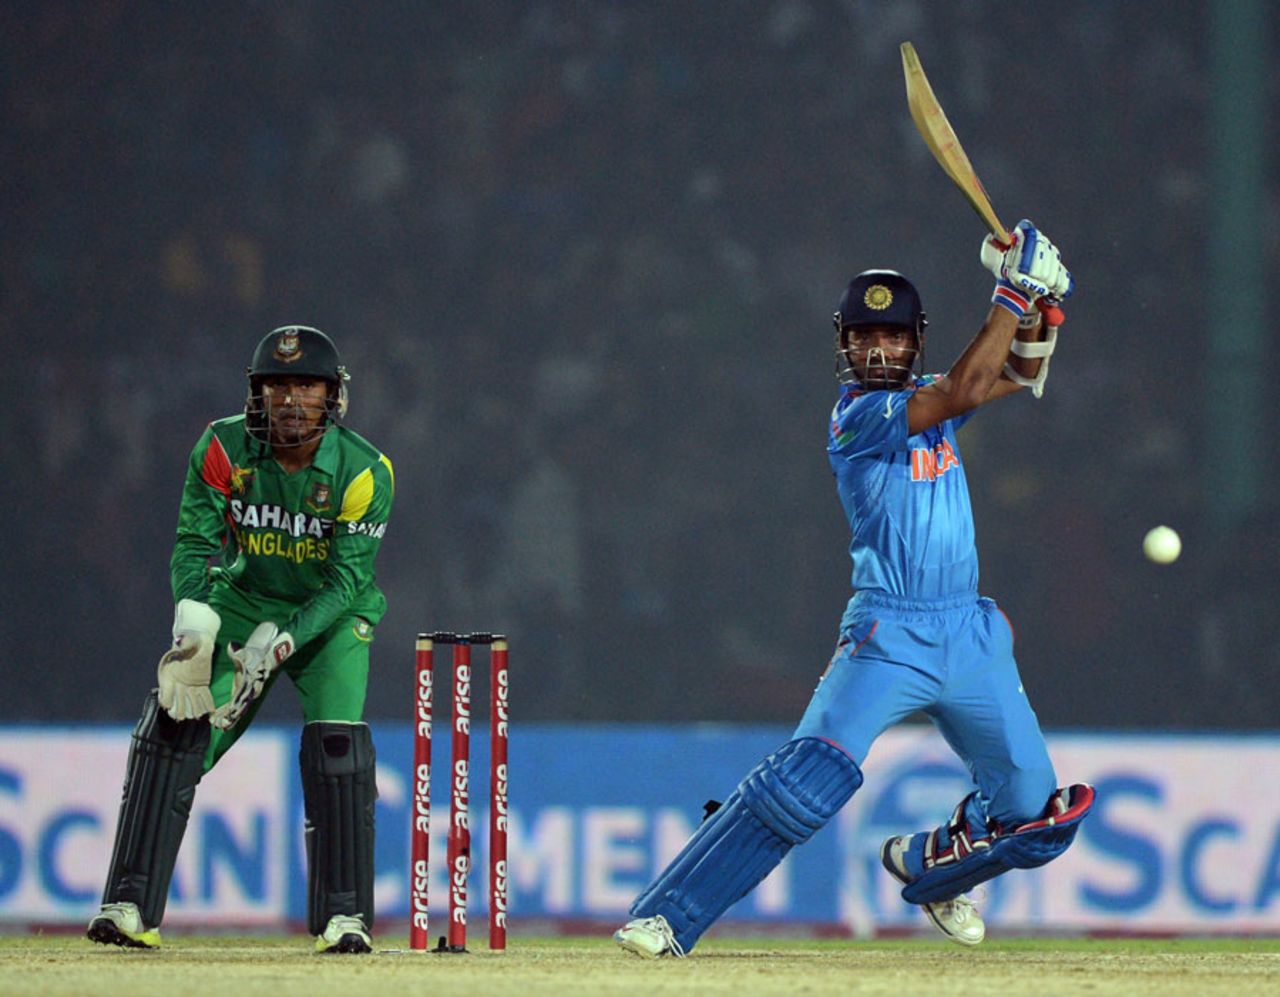 Ajinkya Rahane punches through the covers, Bangladesh v India, Asia Cup 2014, Fatullah, February 26, 2014